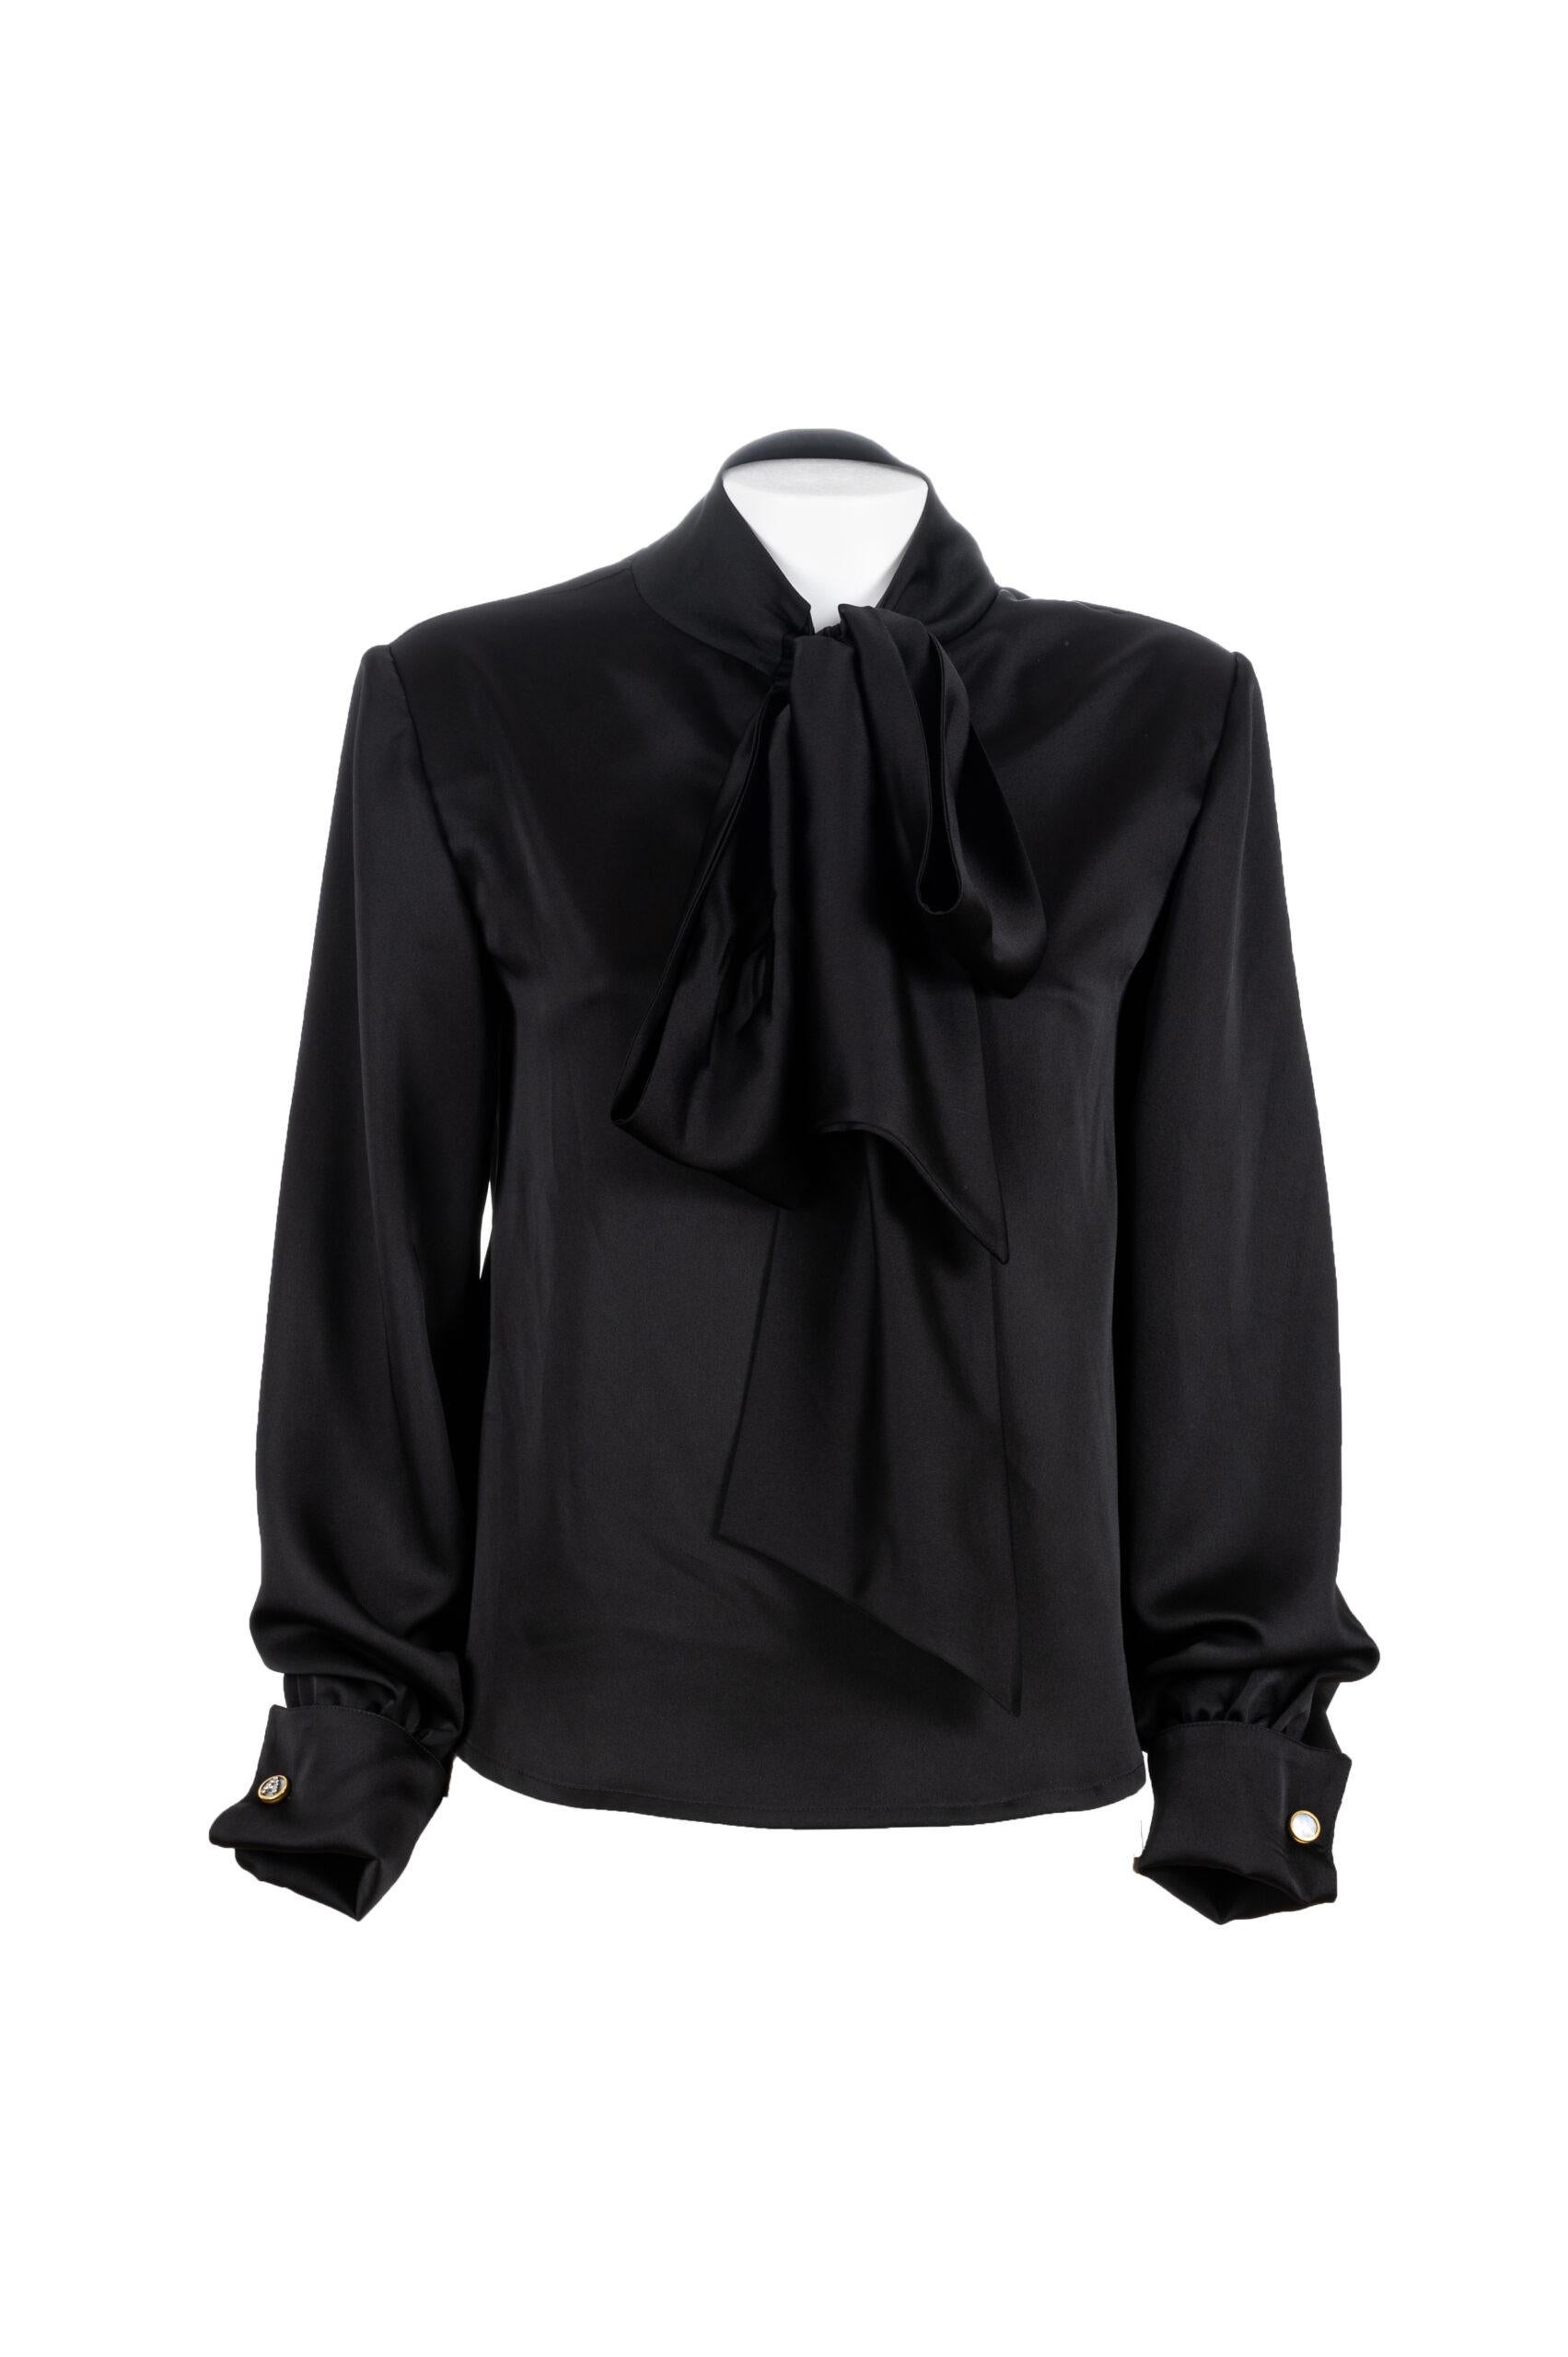 Women's Black silk blouse NWOT